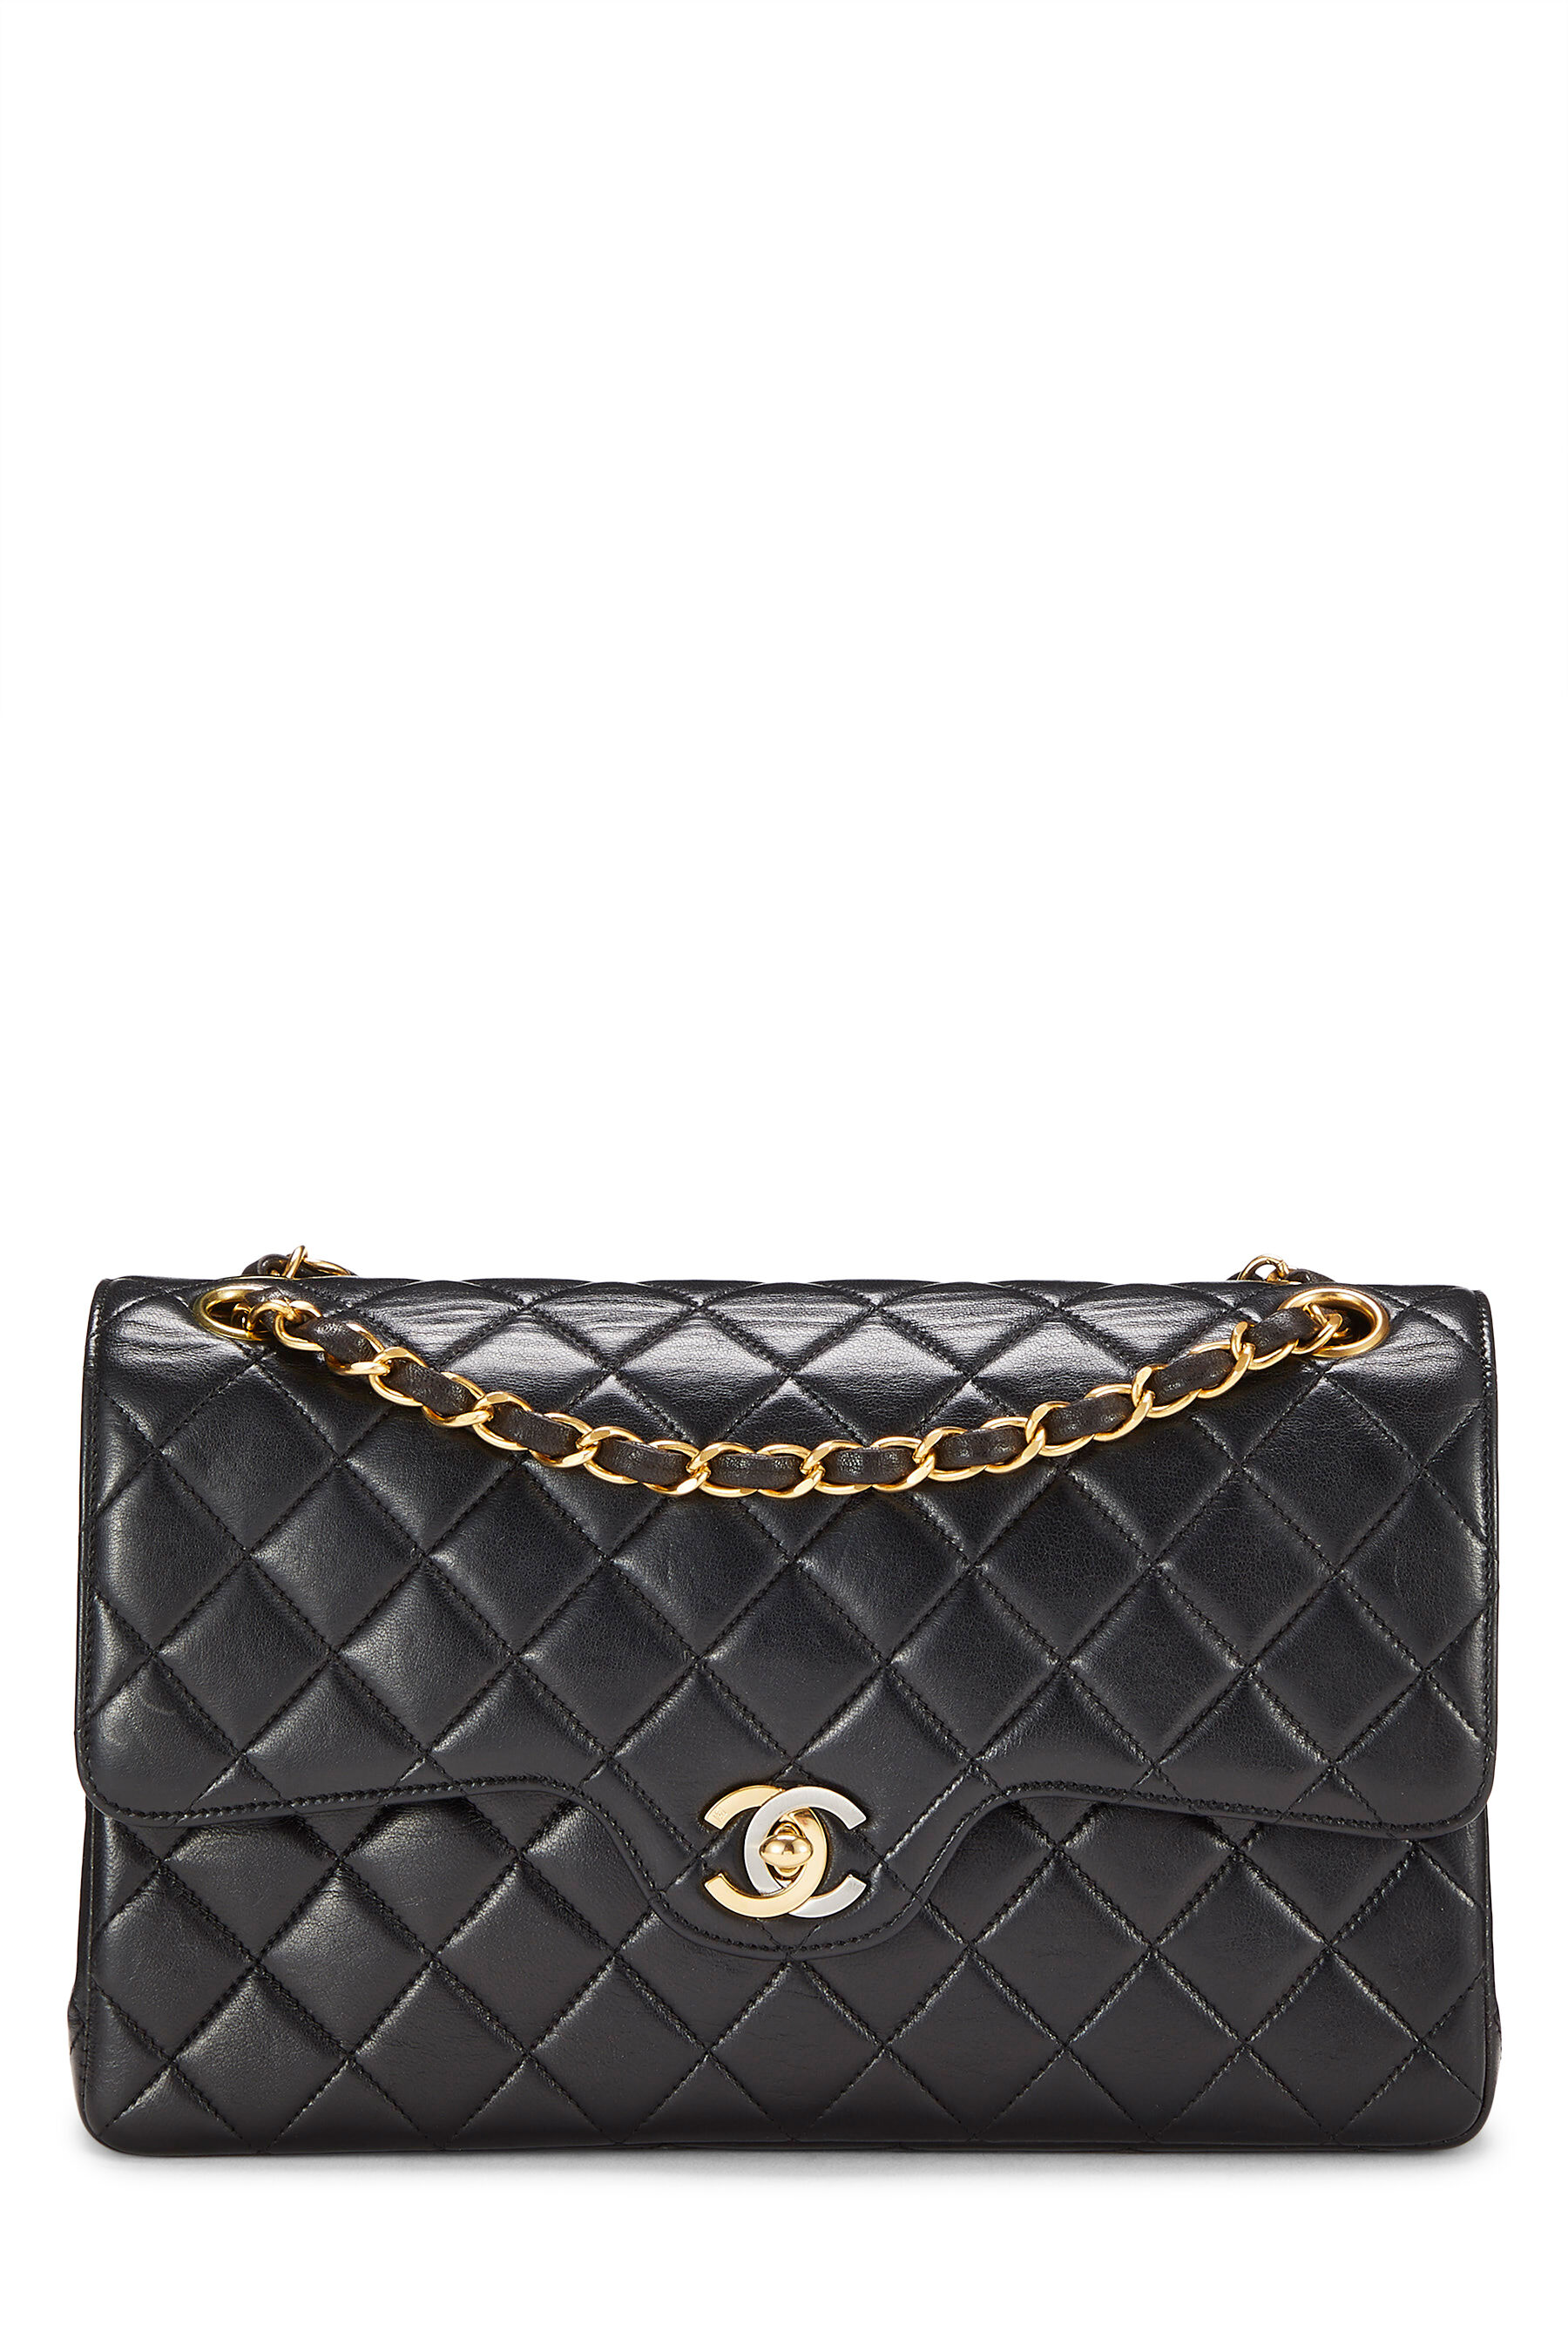 chanel tote black leather handbag